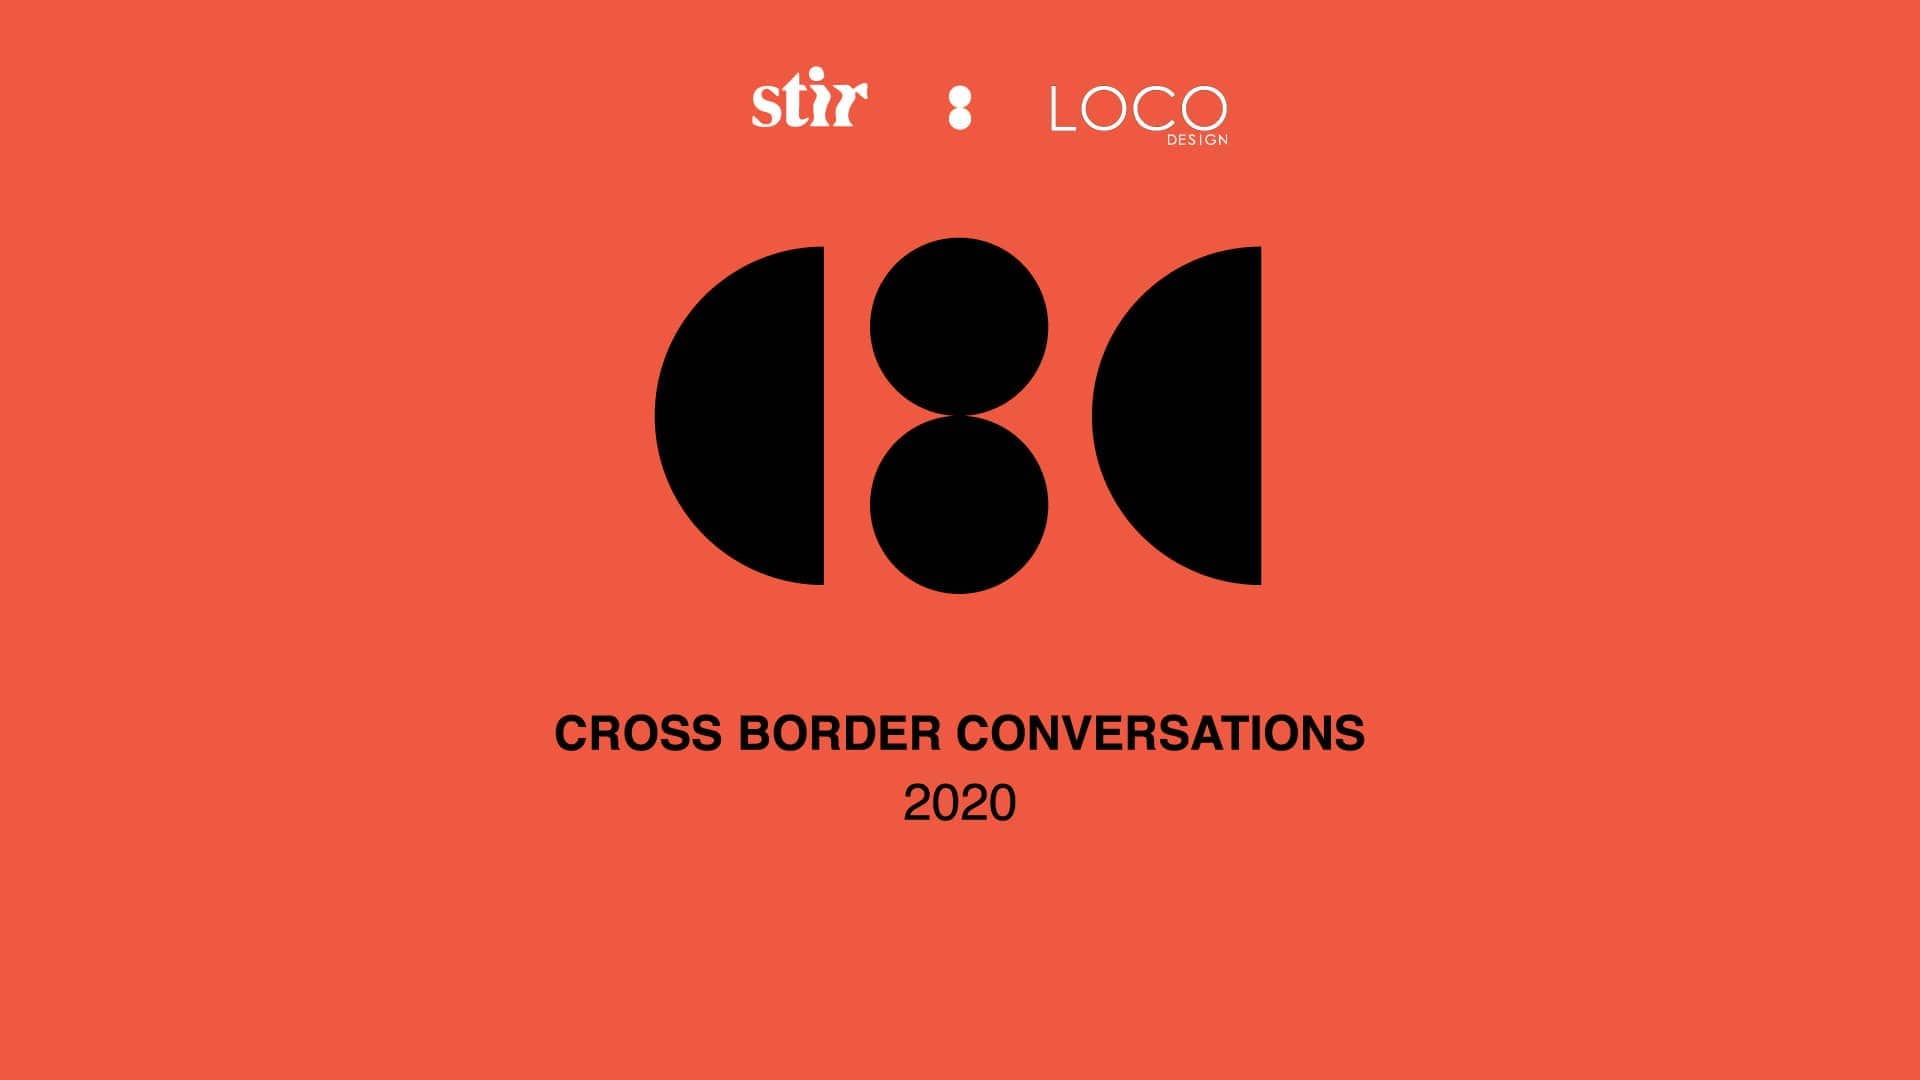 Cross Border Conversations: STIR video series with global creative changemakers